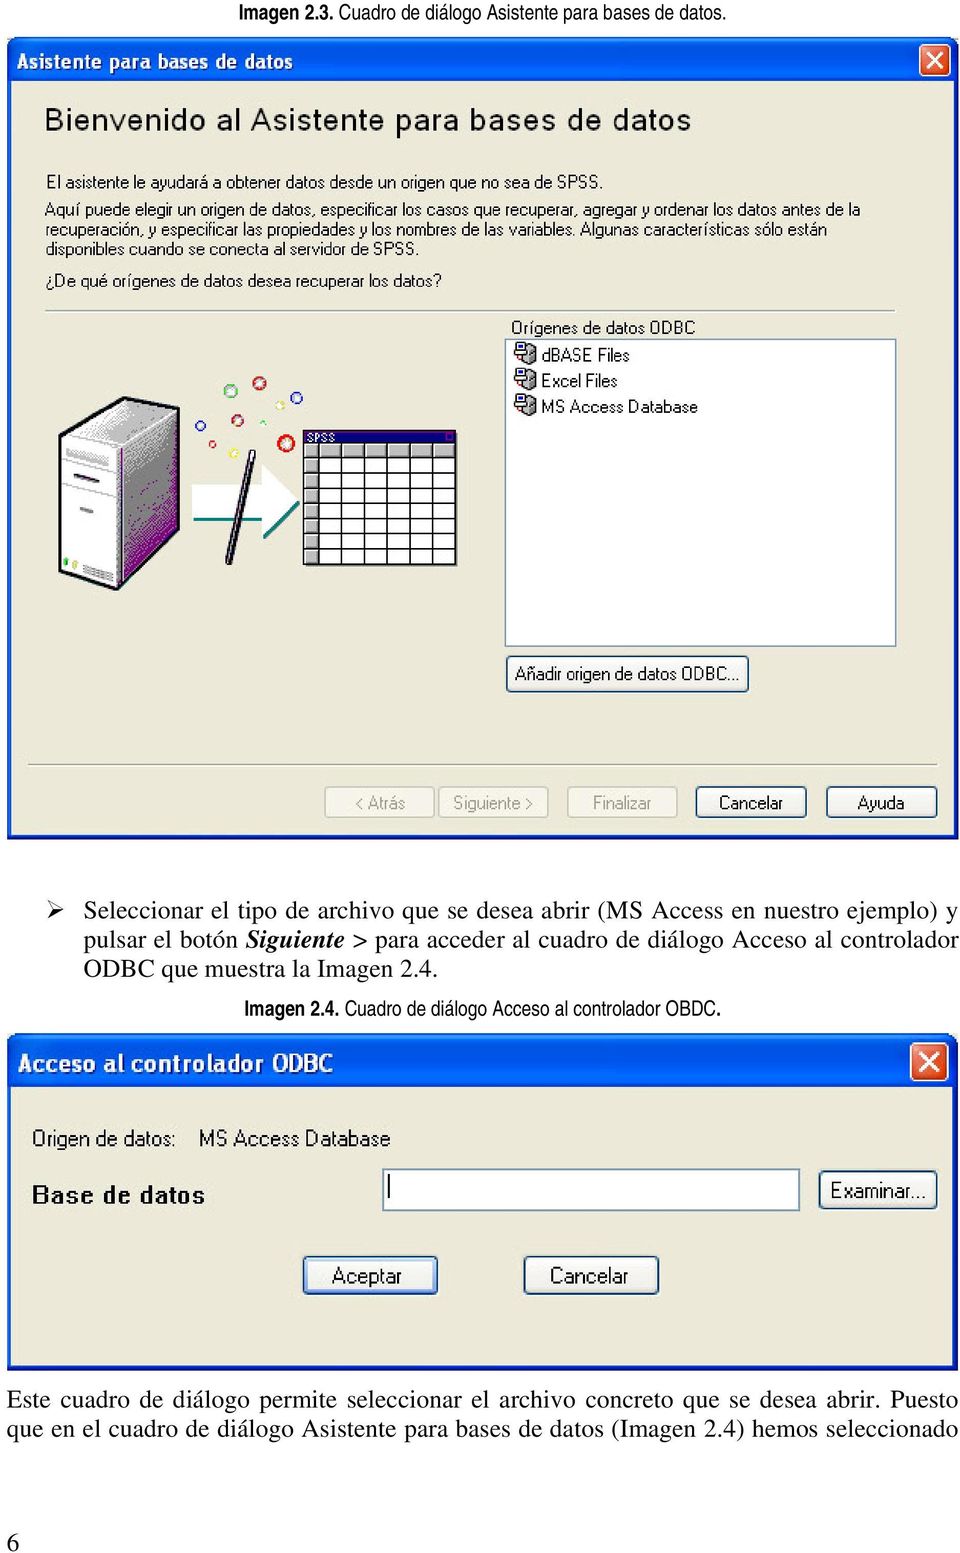 al cuadro de diálogo Acceso al controlador ODBC que muestra la Imagen 2.4. Imagen 2.4. Cuadro de diálogo Acceso al controlador OBDC.